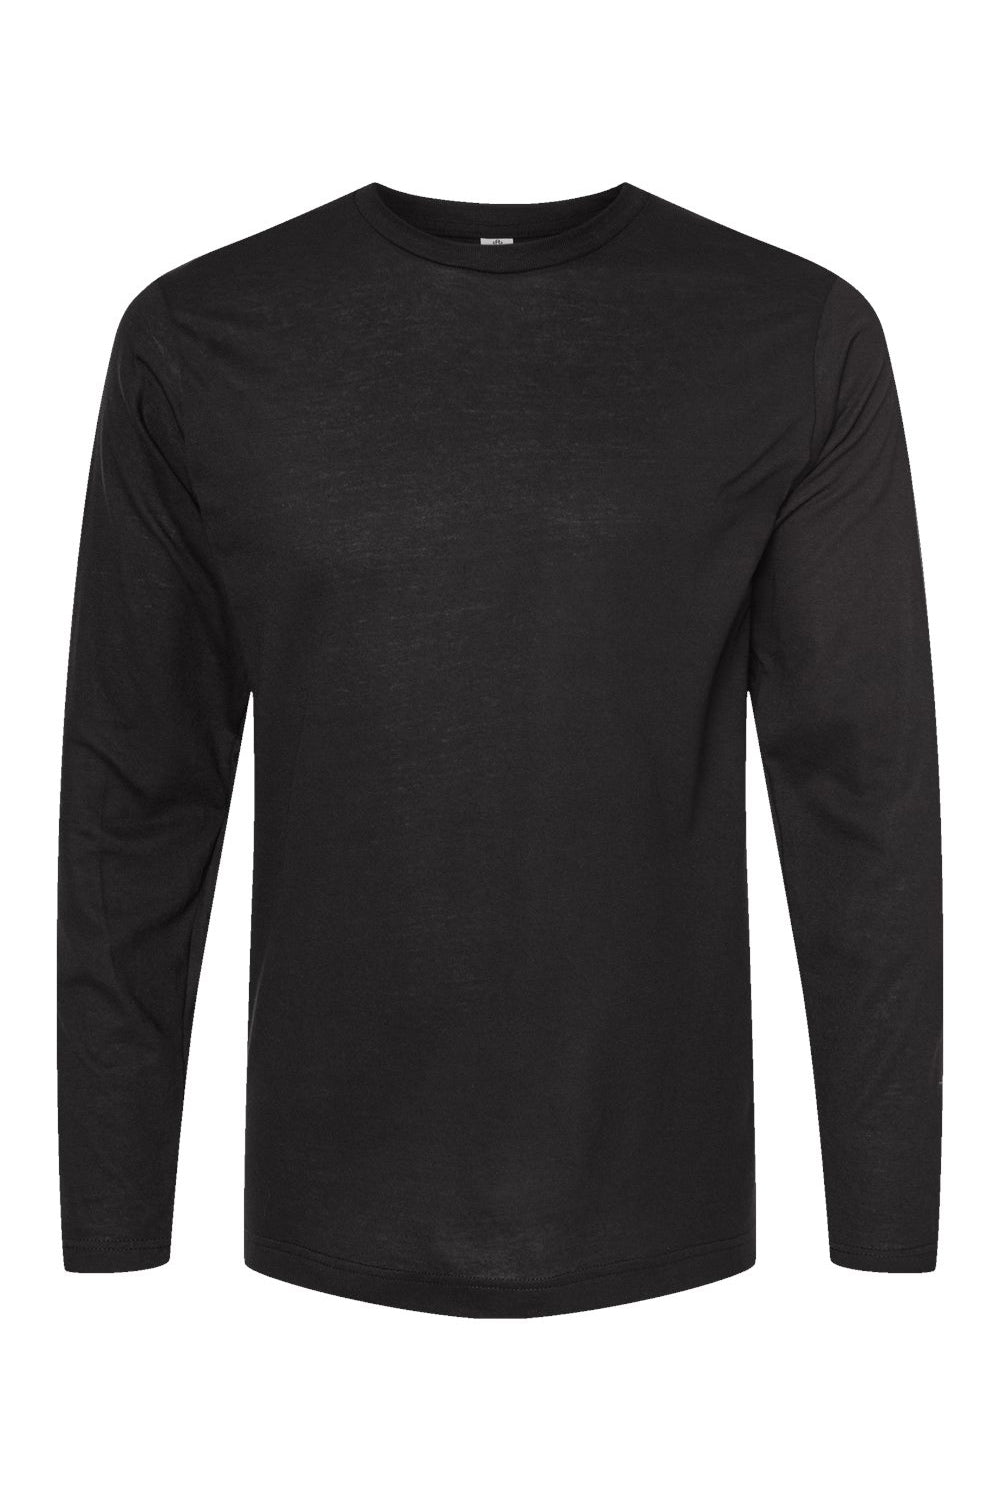 Tultex 242 Mens Poly-Rich Long Sleeve Crewneck T-Shirt Black Flat Front